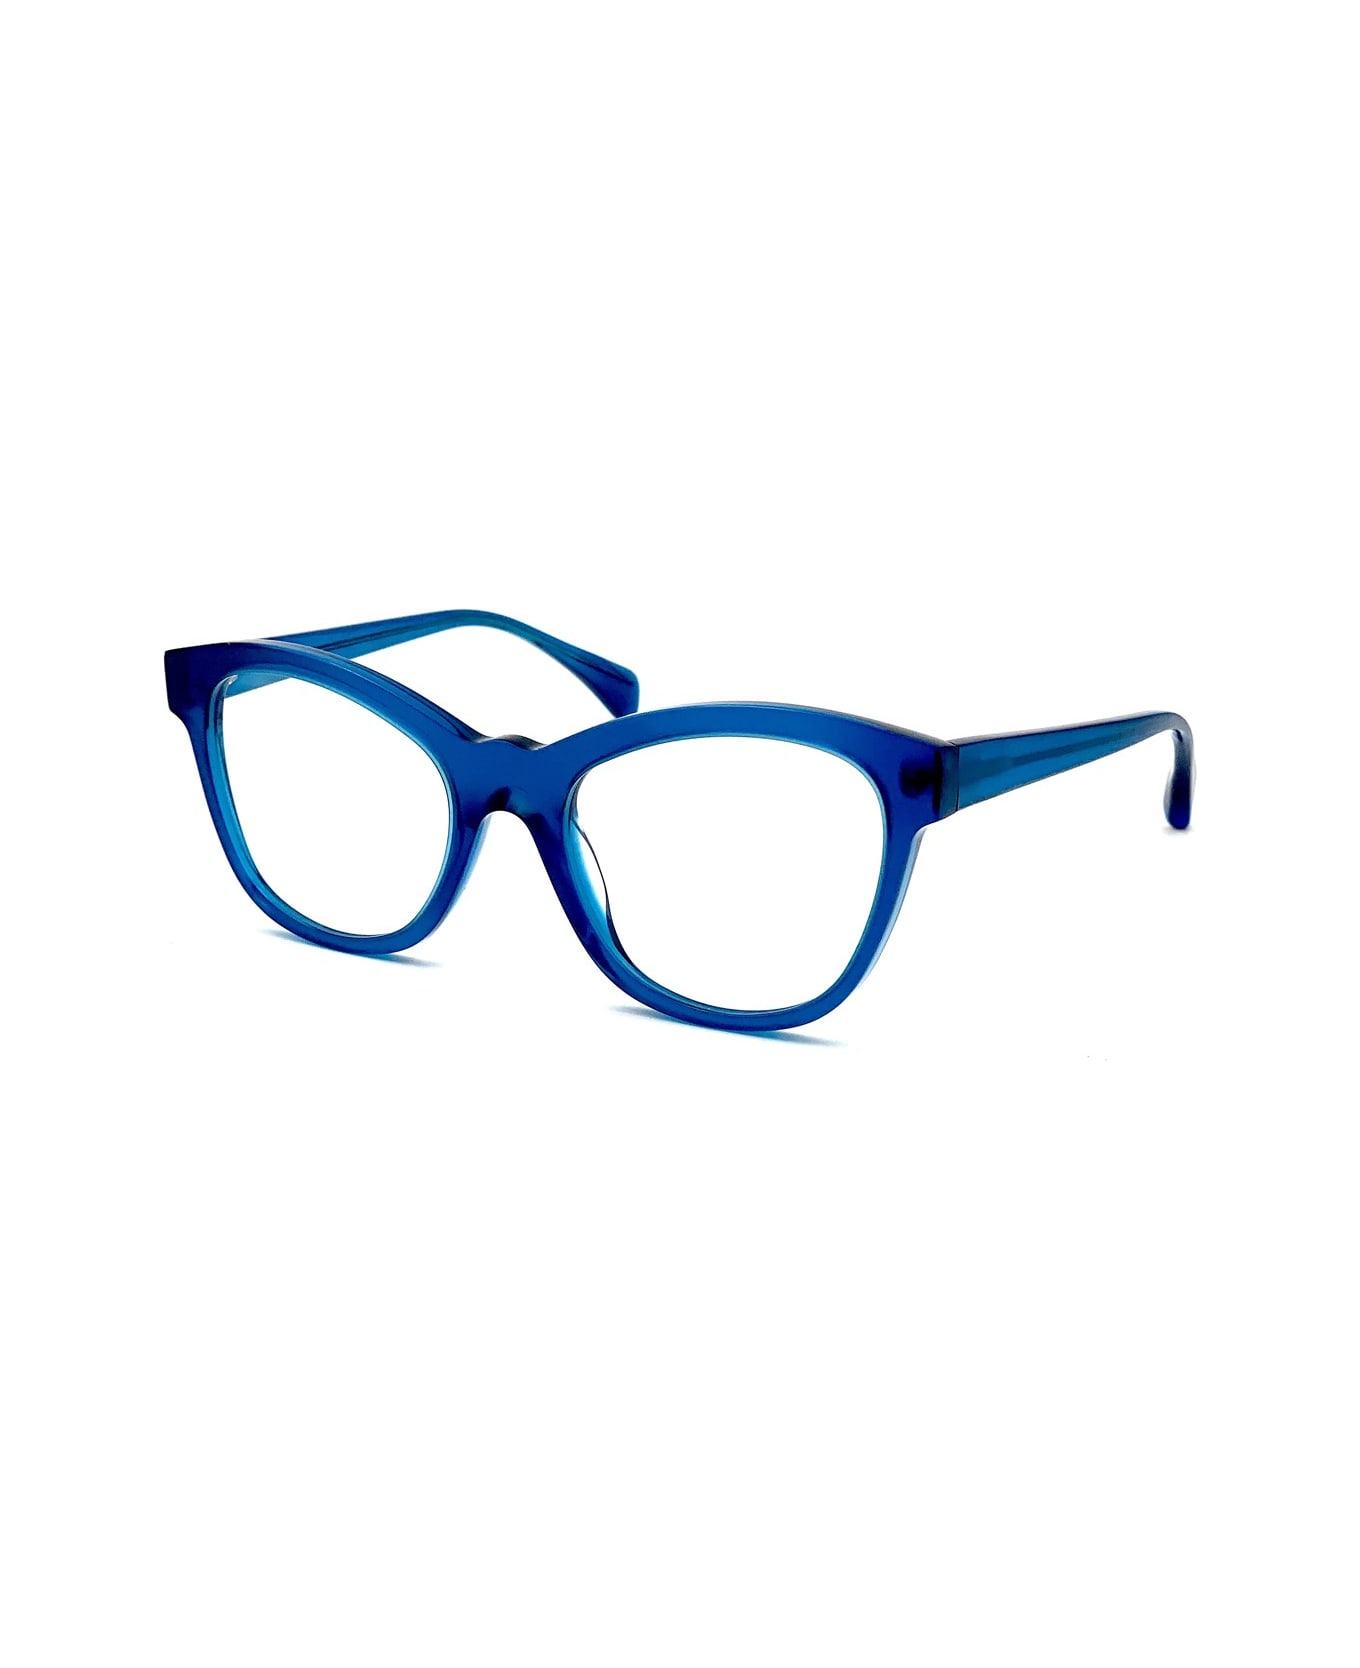 Jacques Durand Porquerolles Xl 169 Glasses - Blu